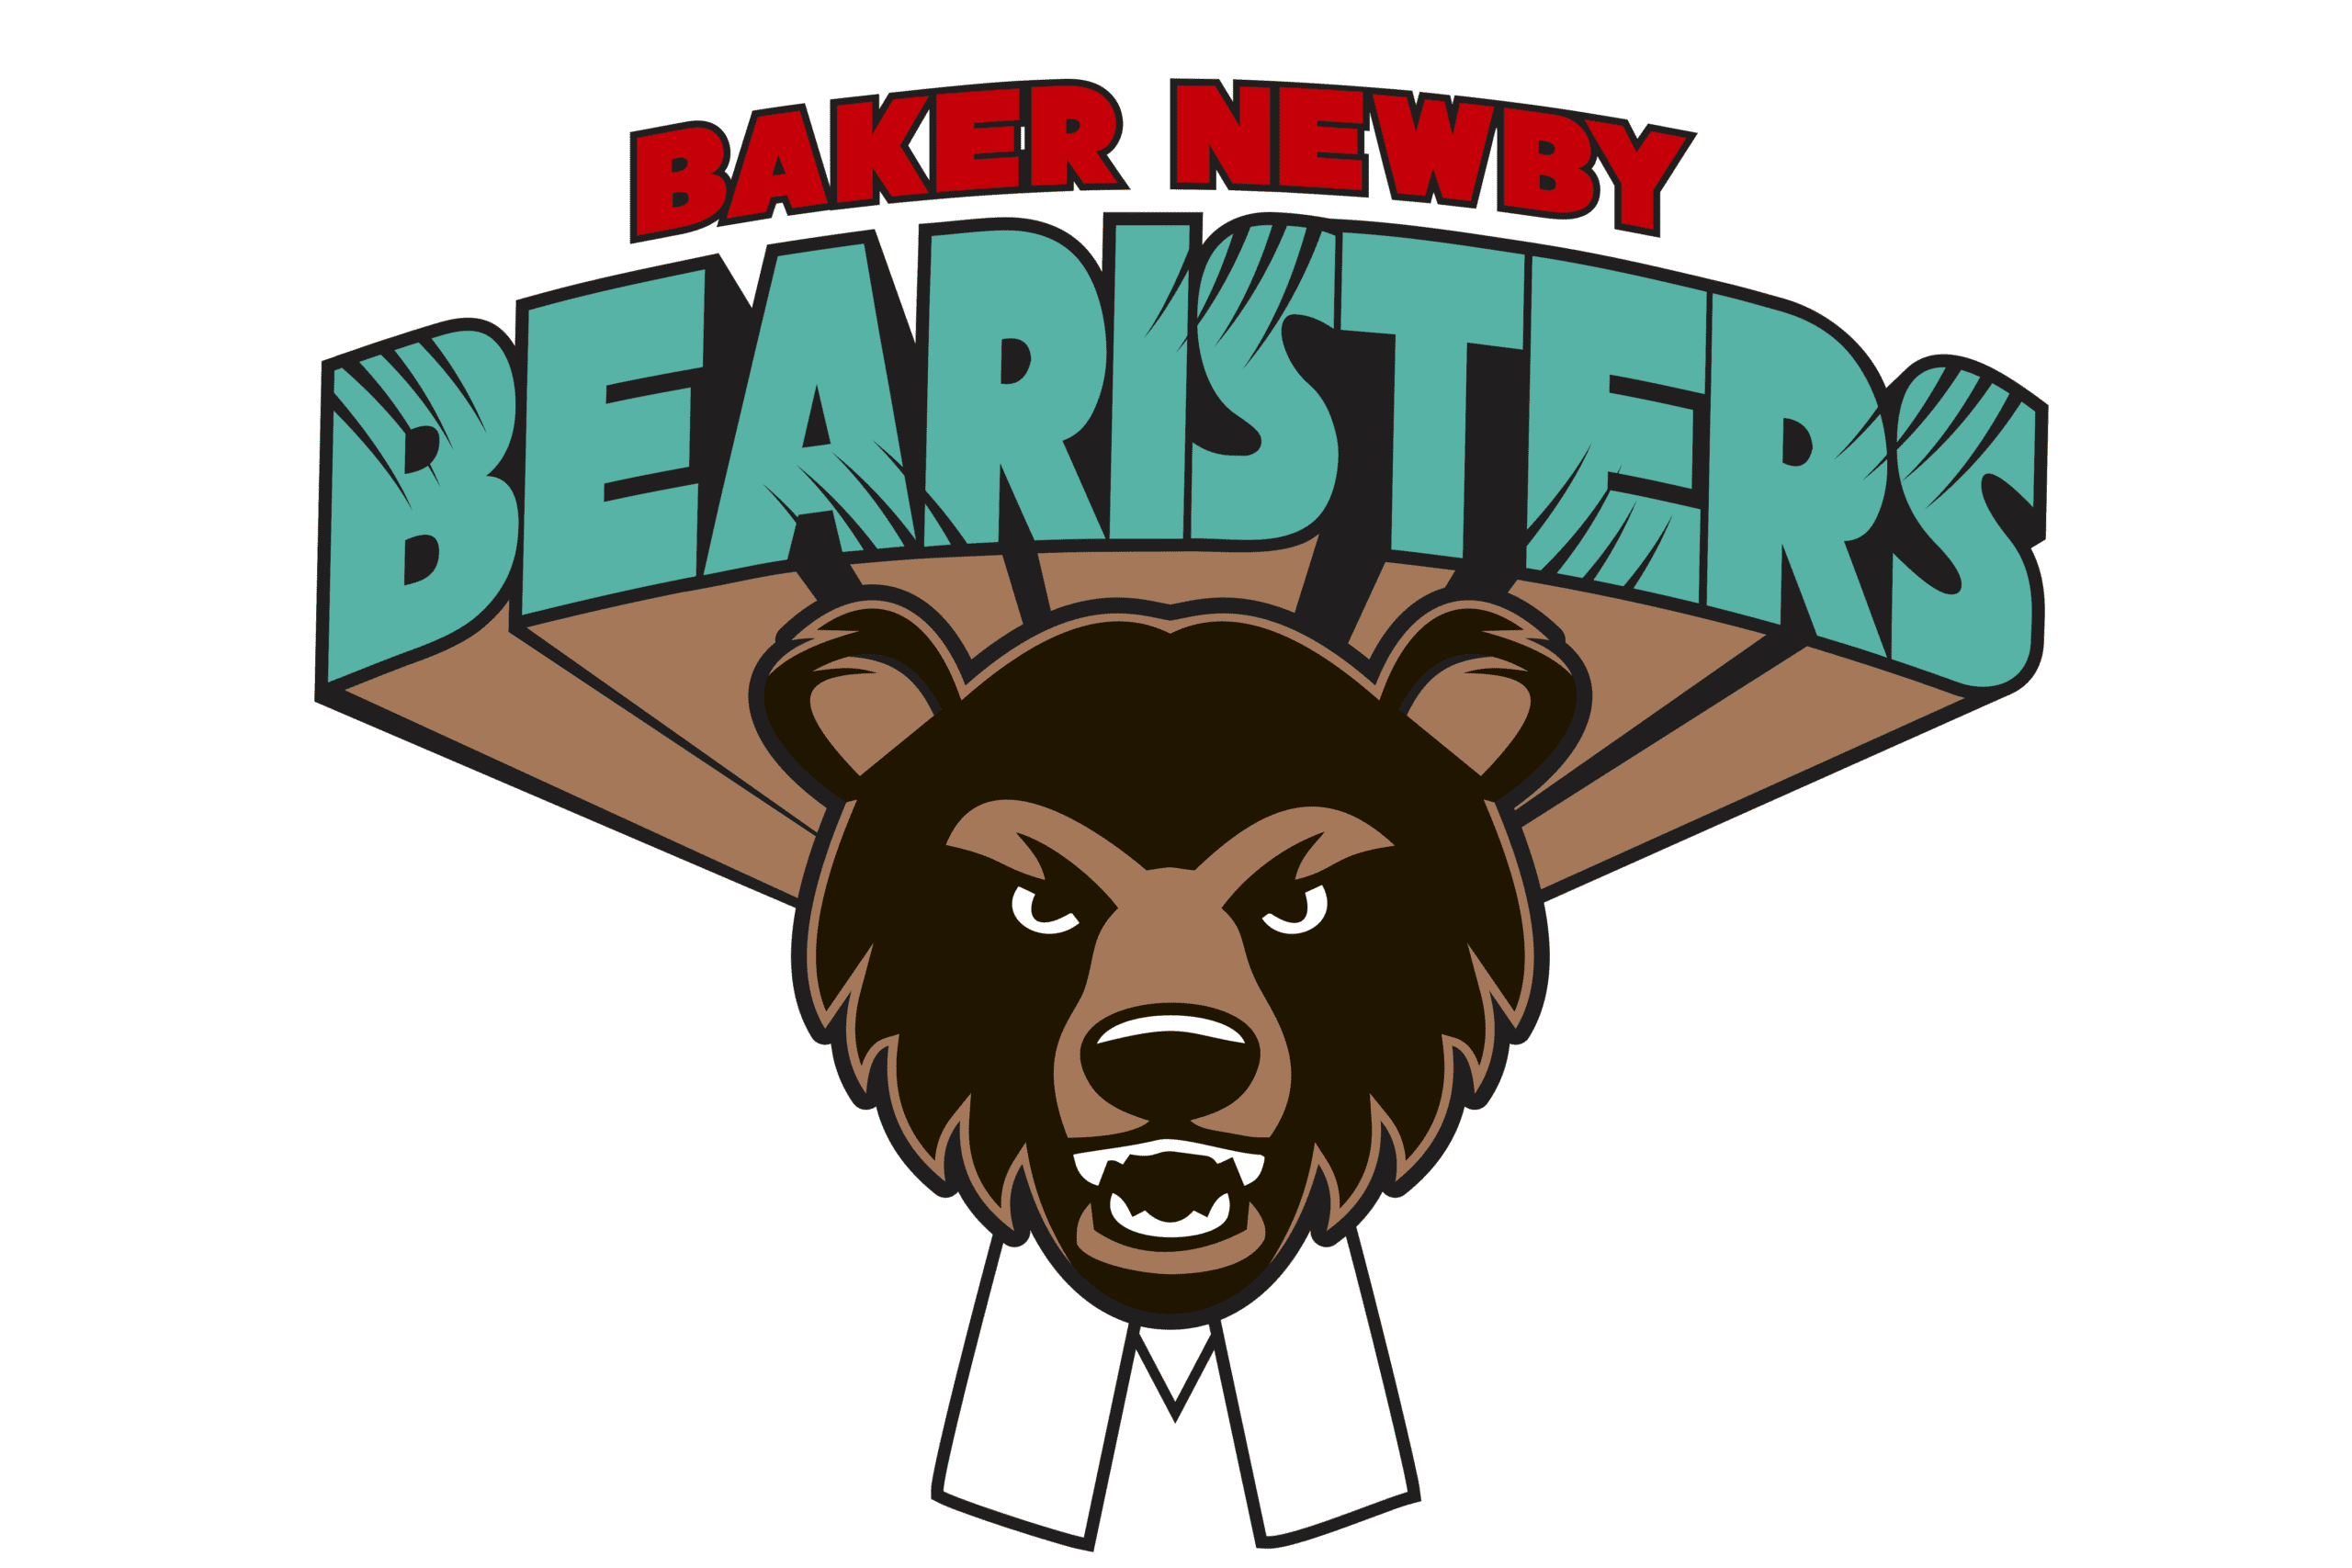 Baker Newby Bearisters